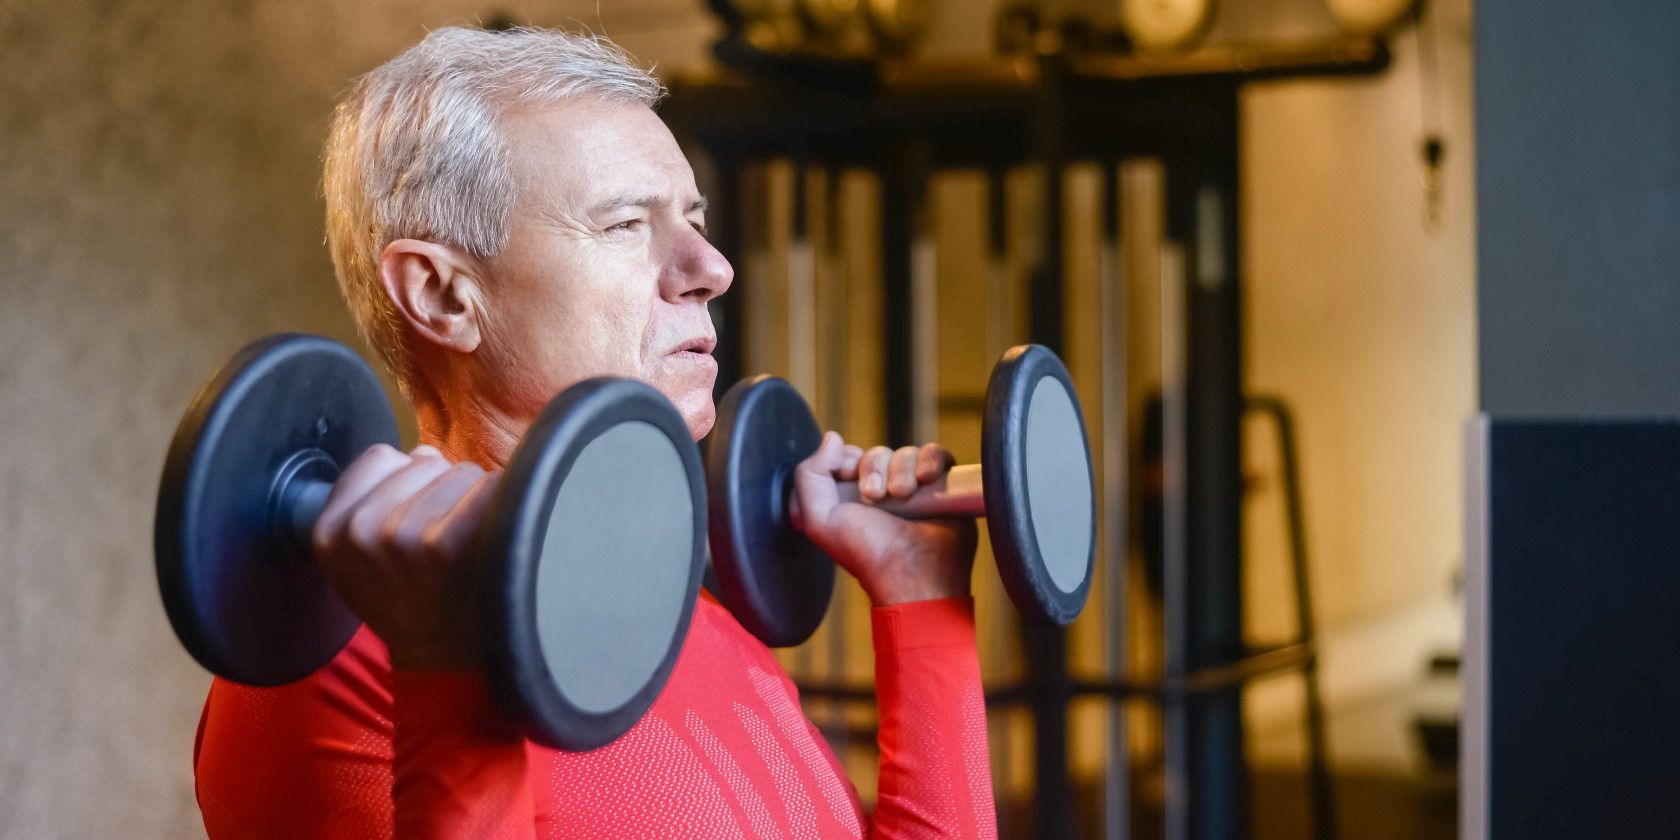 SENIOR WORKOUT (ADVANCED)- Exercise for seniors & beginners. Senior fitness  that's fun & effective! 